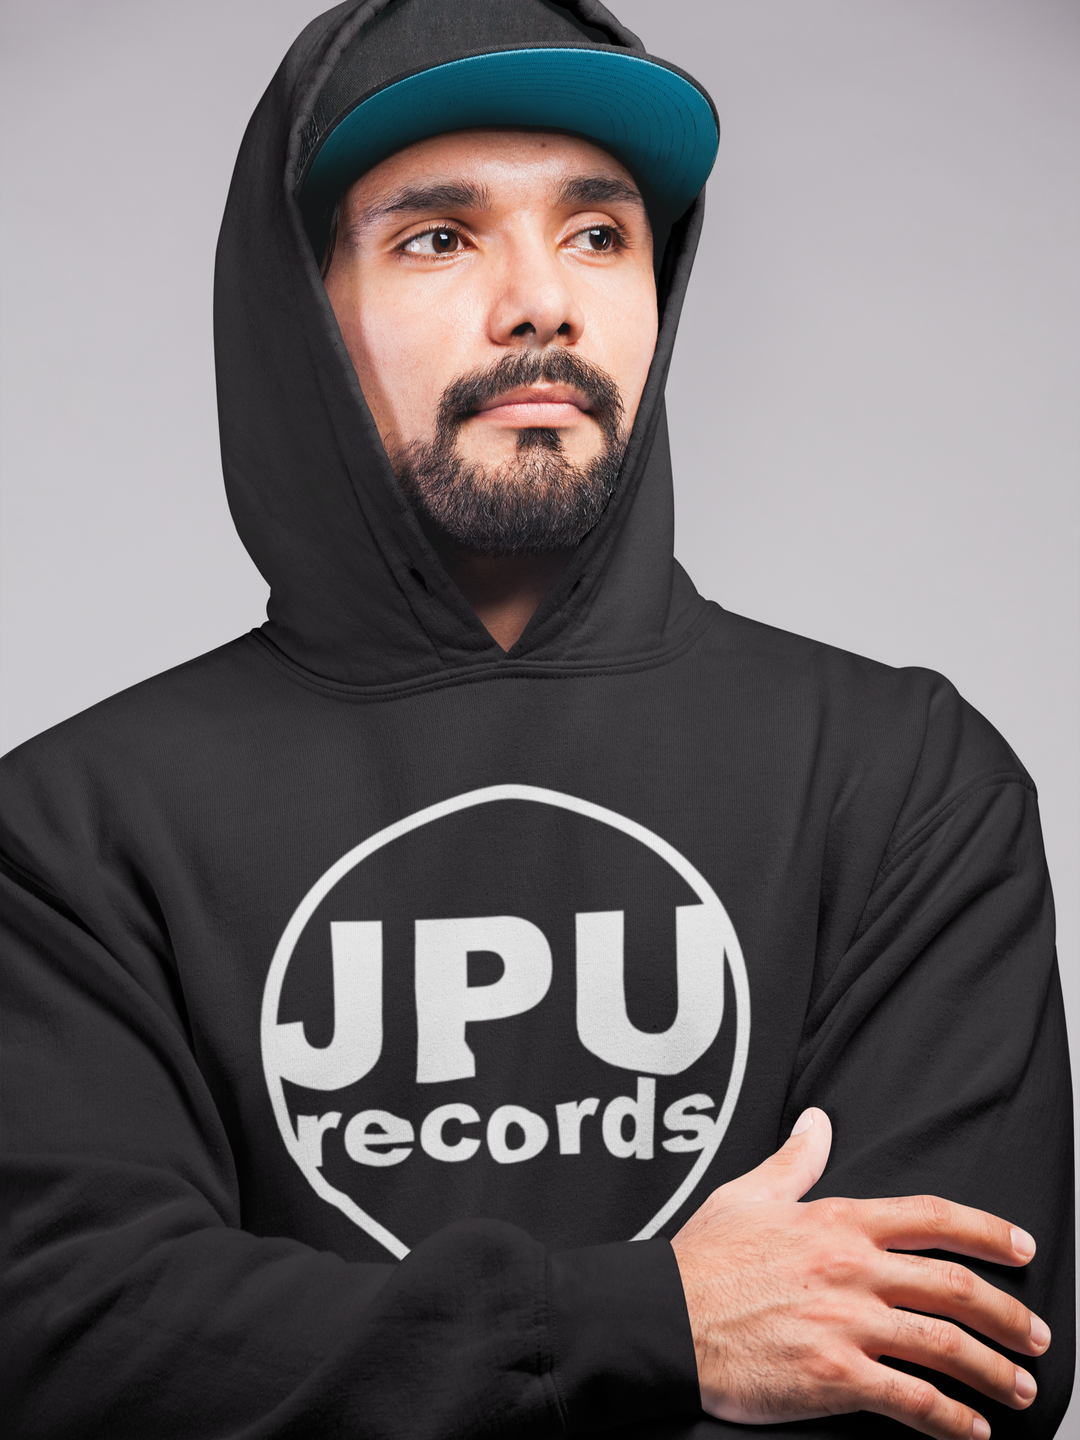 JPU Records merch: Hoodie